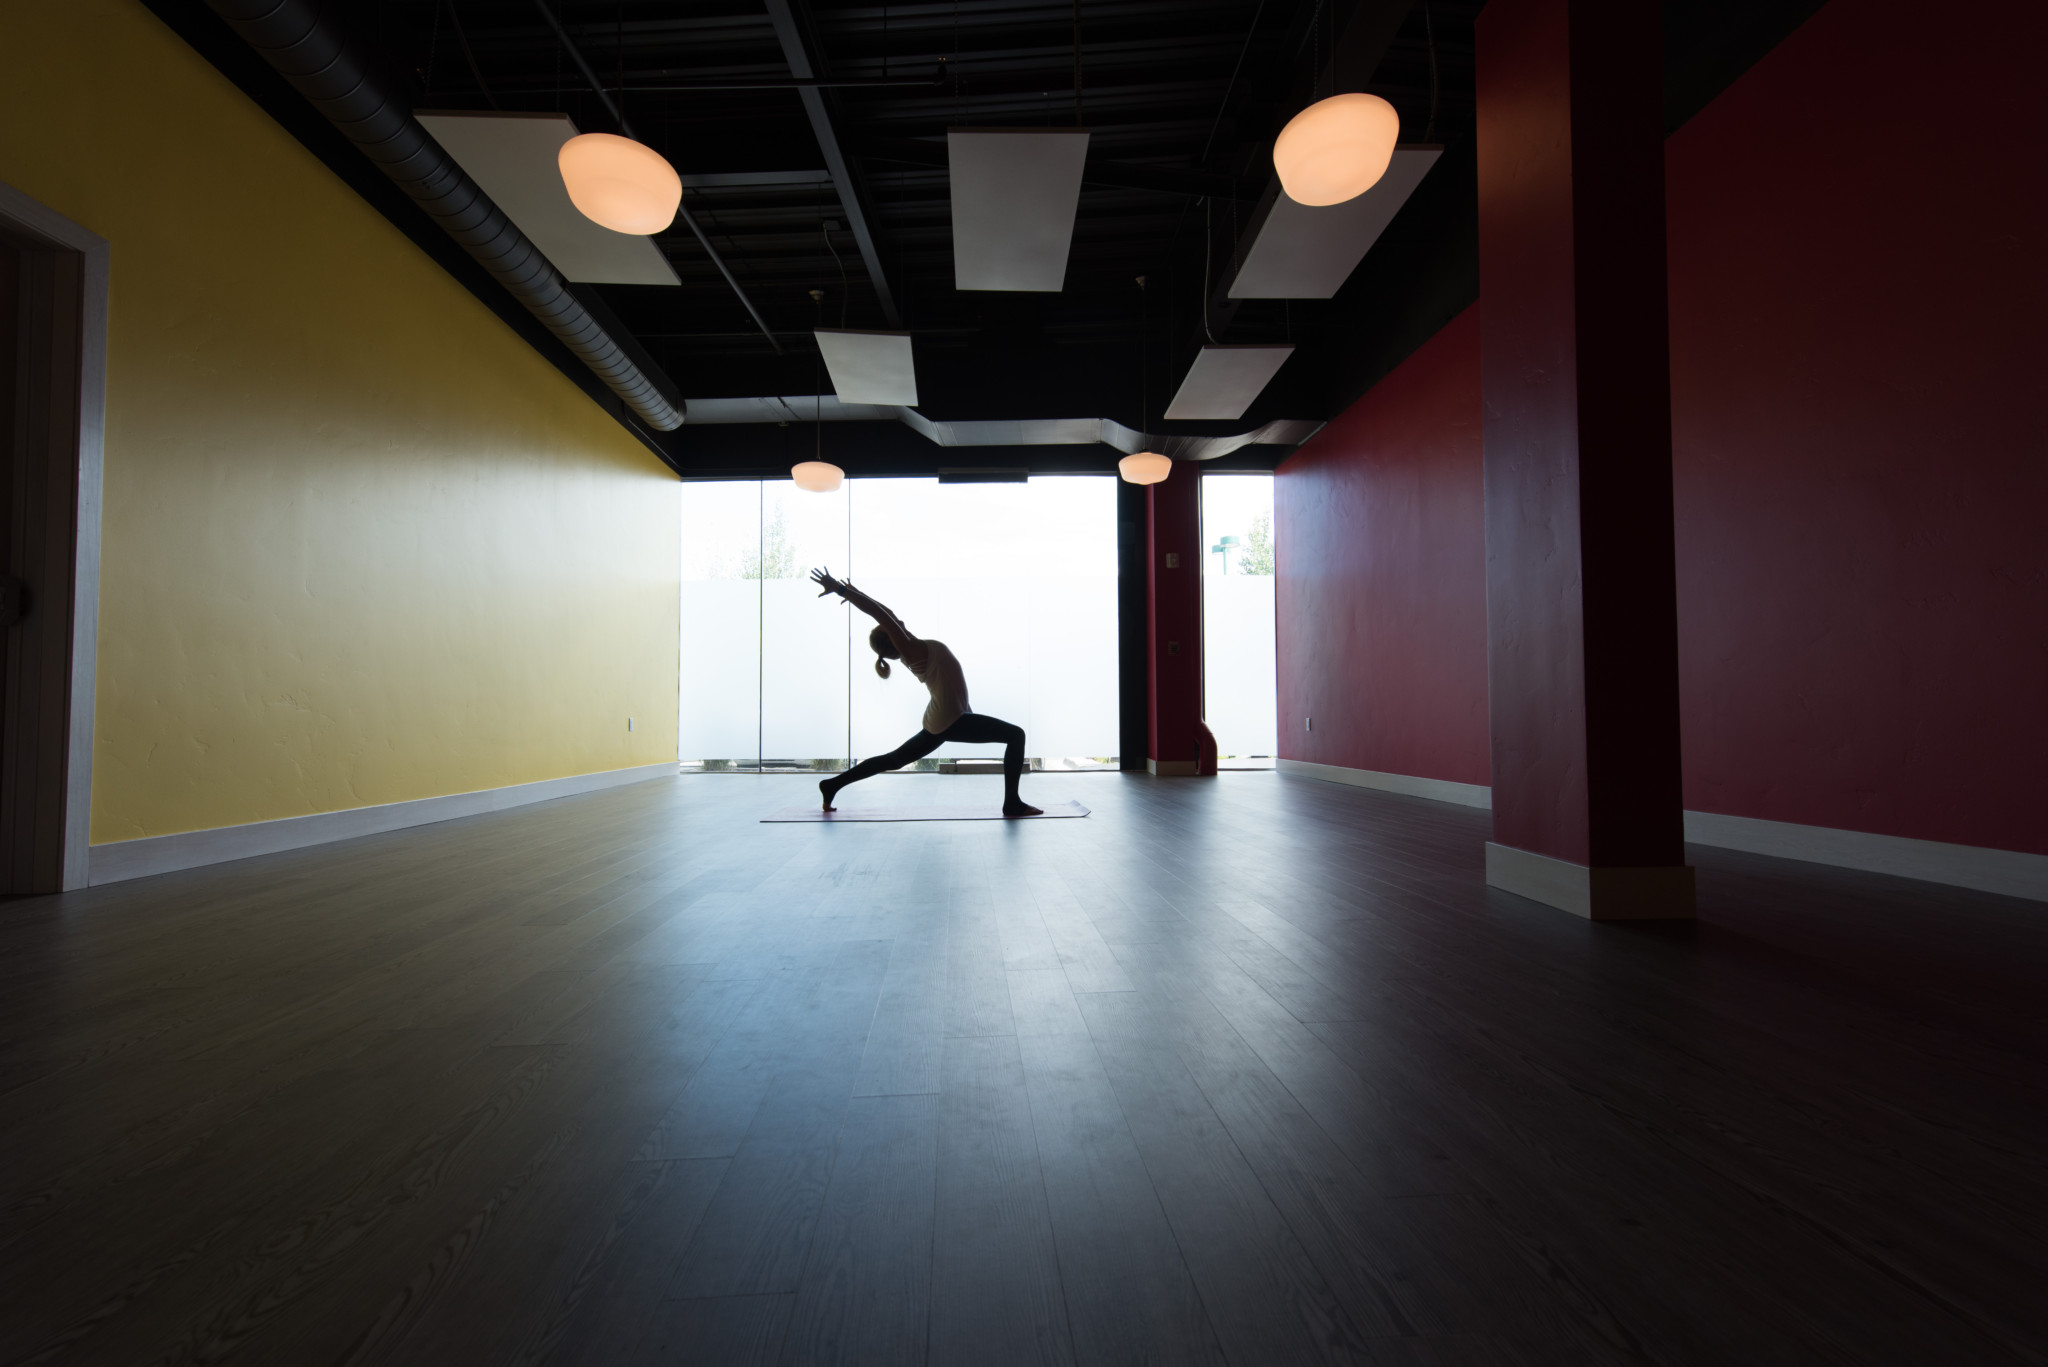 commerial Property - Revolution-power-yoga-Avon-yoga-studio-vynl-plank-flooring